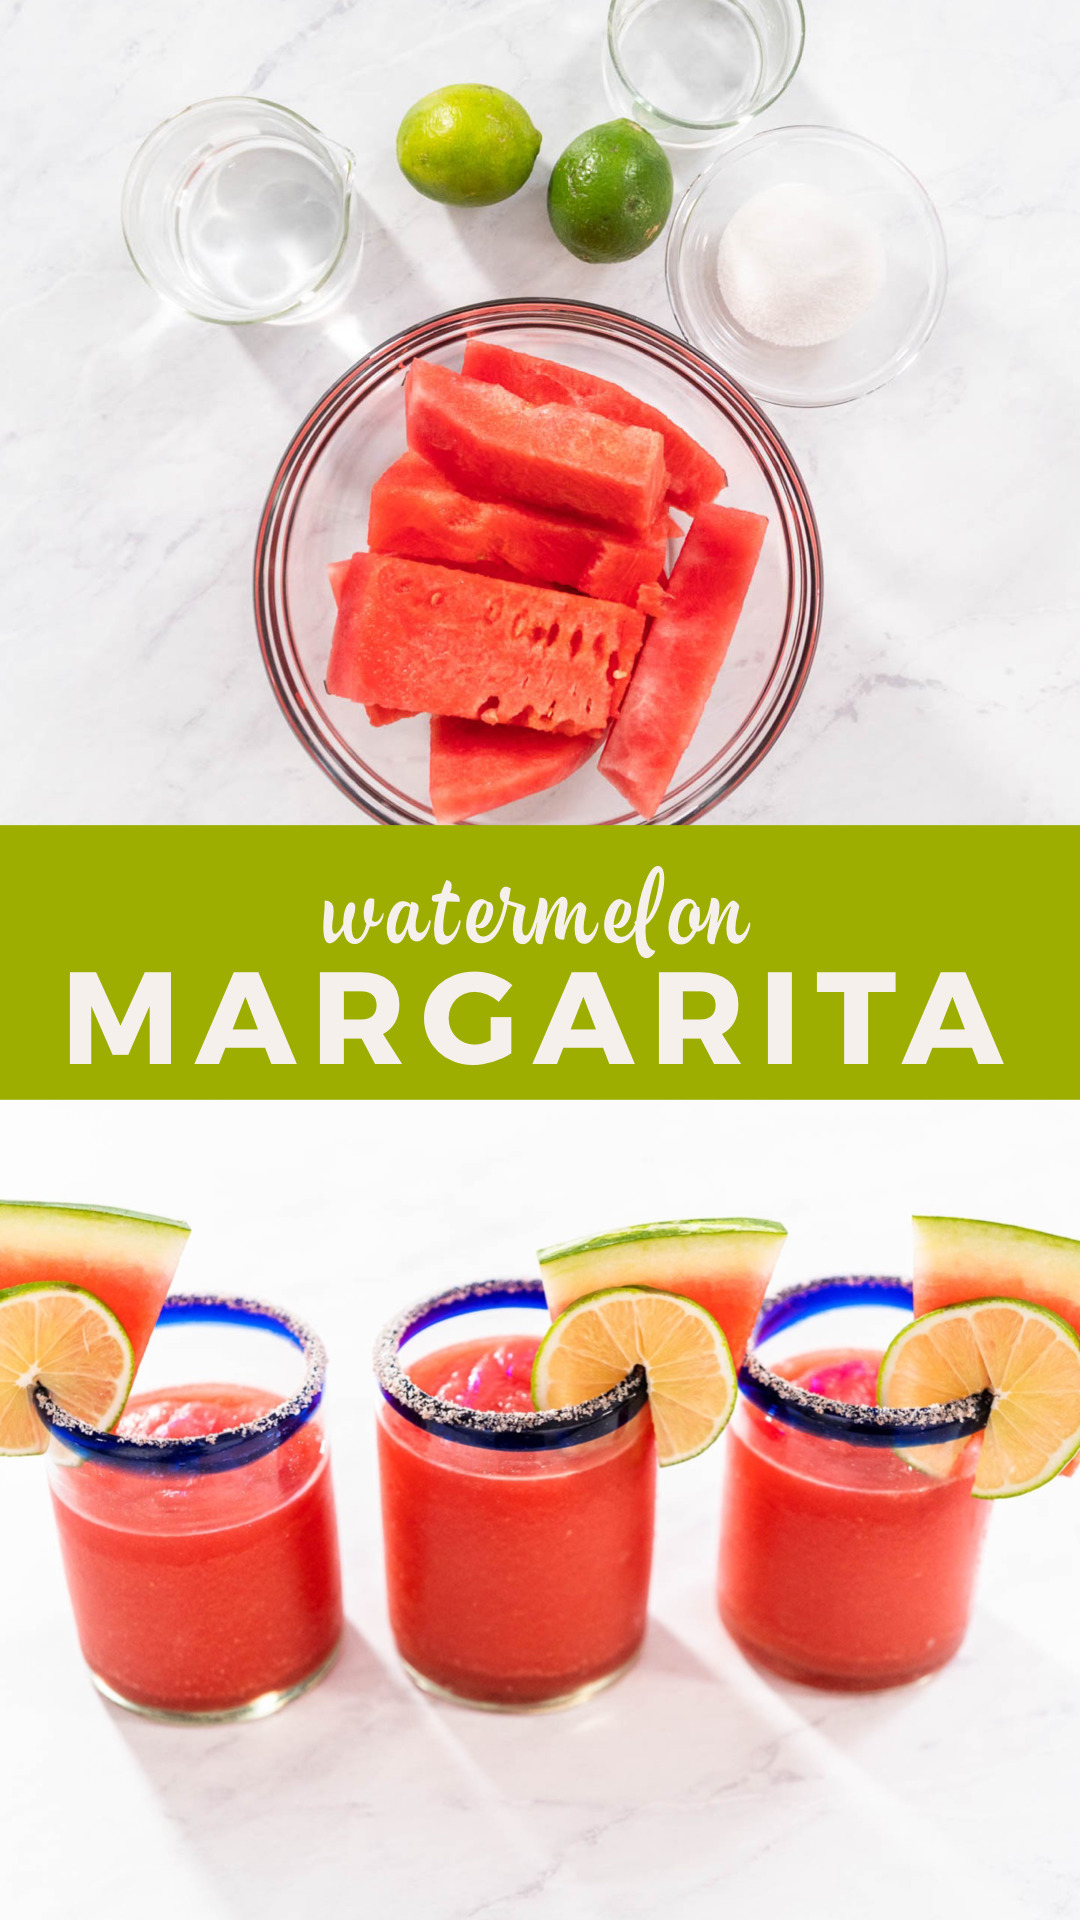 Watermelon margarita with frozen watermelon